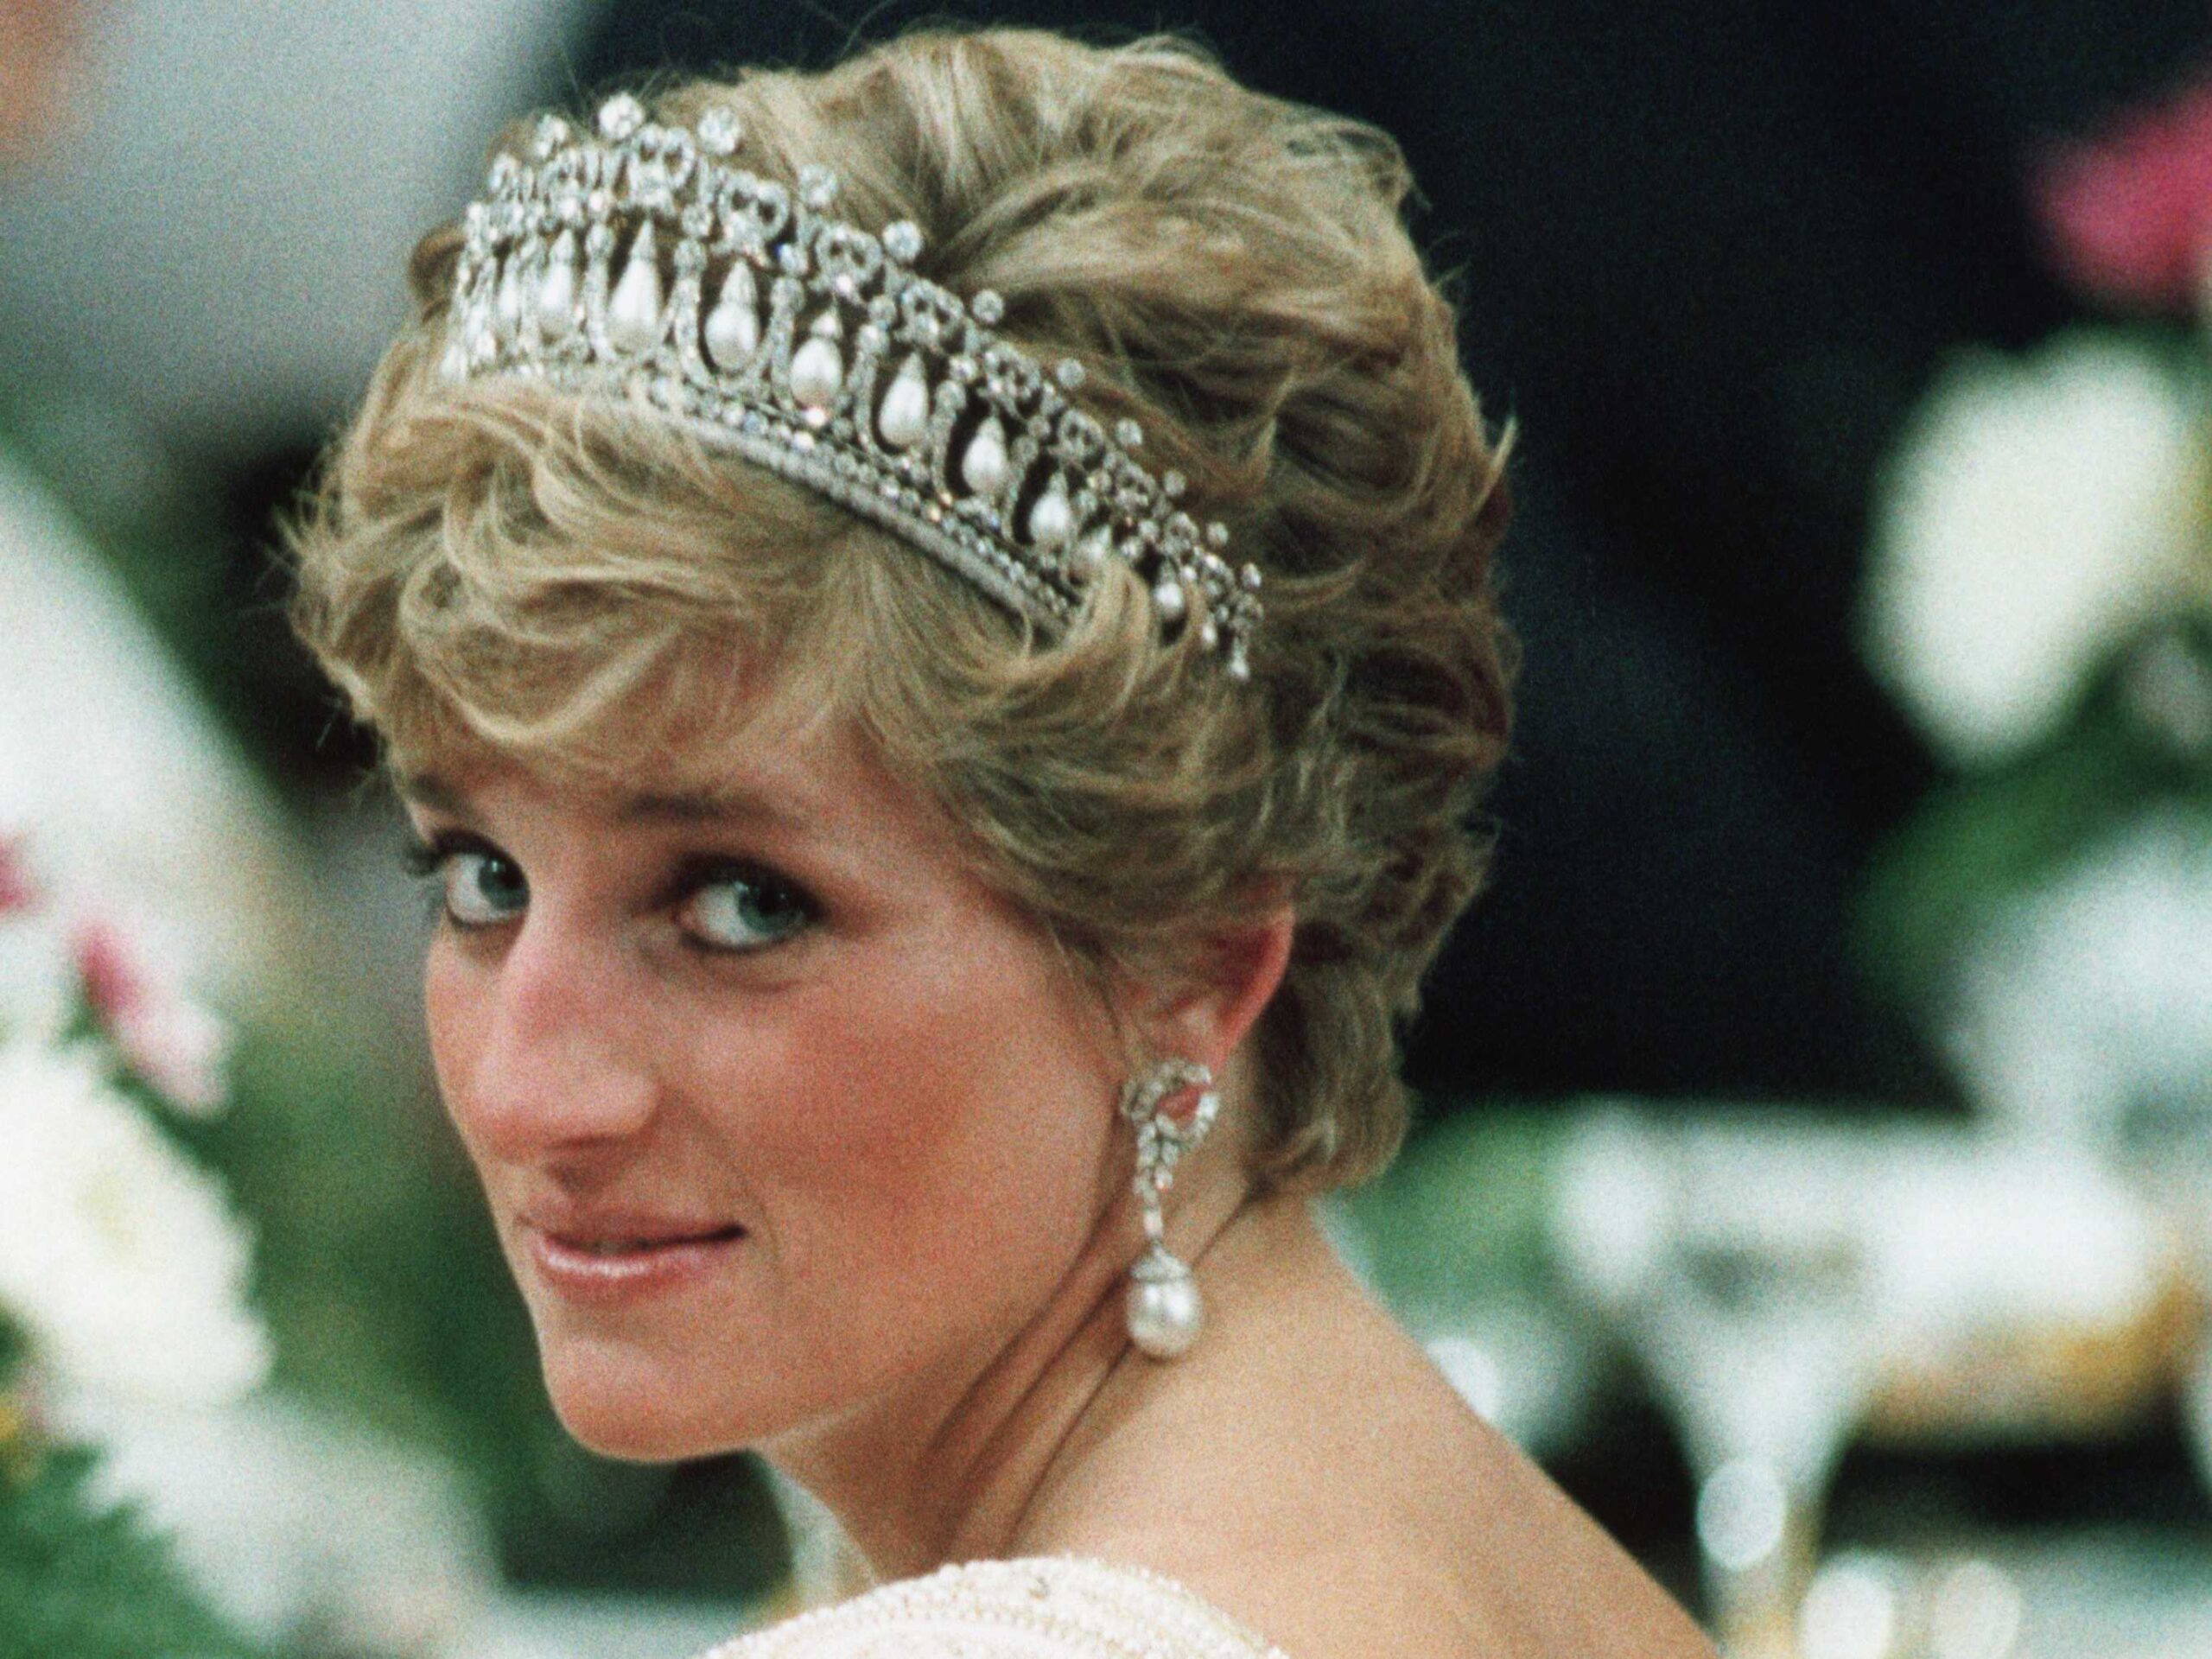 Le 10 frasi più belle di Lady Diana